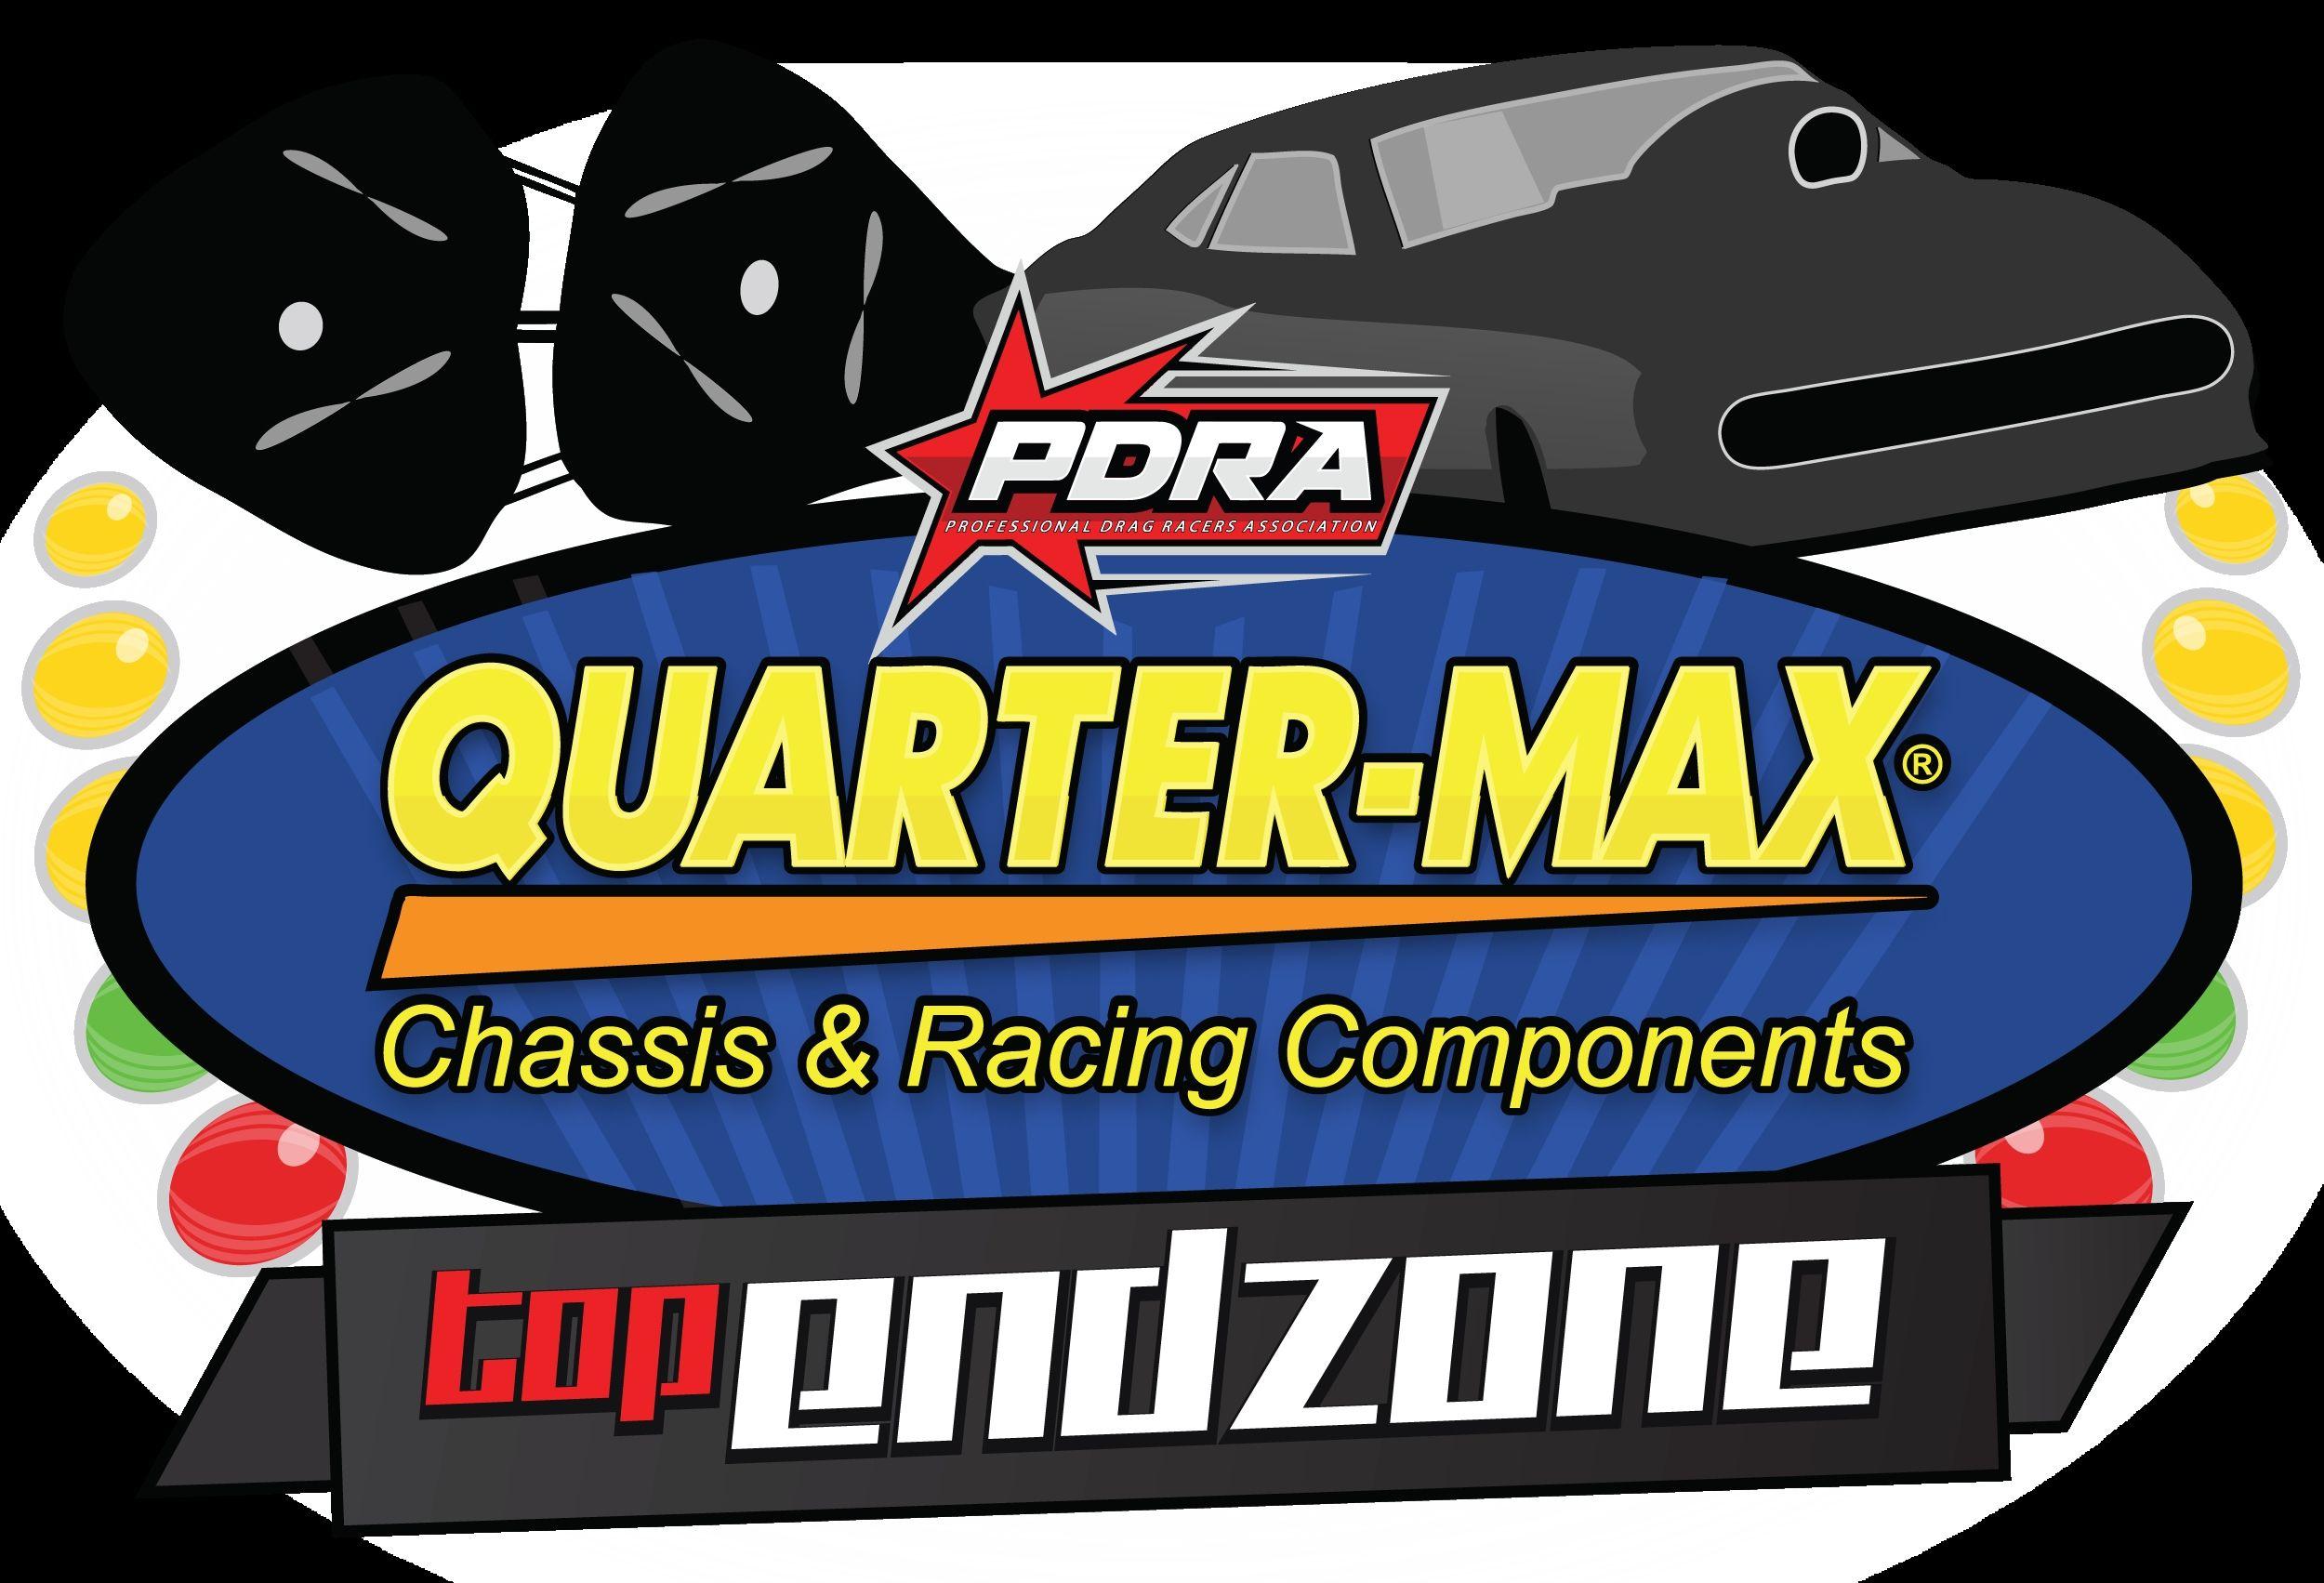 Pdra Logo - QUARTER-MAX SPONSORING 'TOP END ZONE' ON PDRA LIVE FEED ...